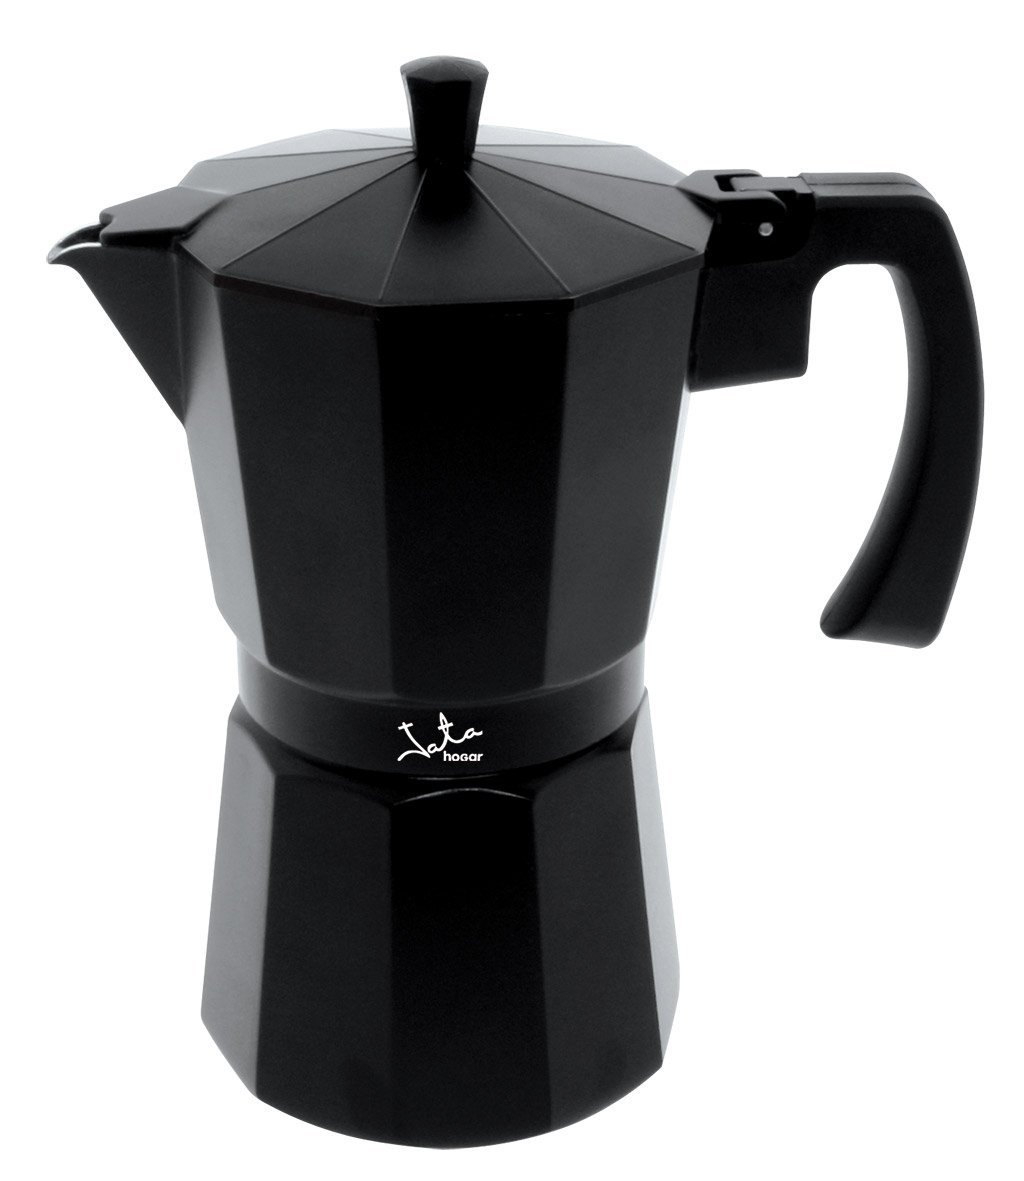 ESPRESSOKOCHER für 1 Tasse Espresso Maker Espressokanne Kaffeekocher BIALETTI